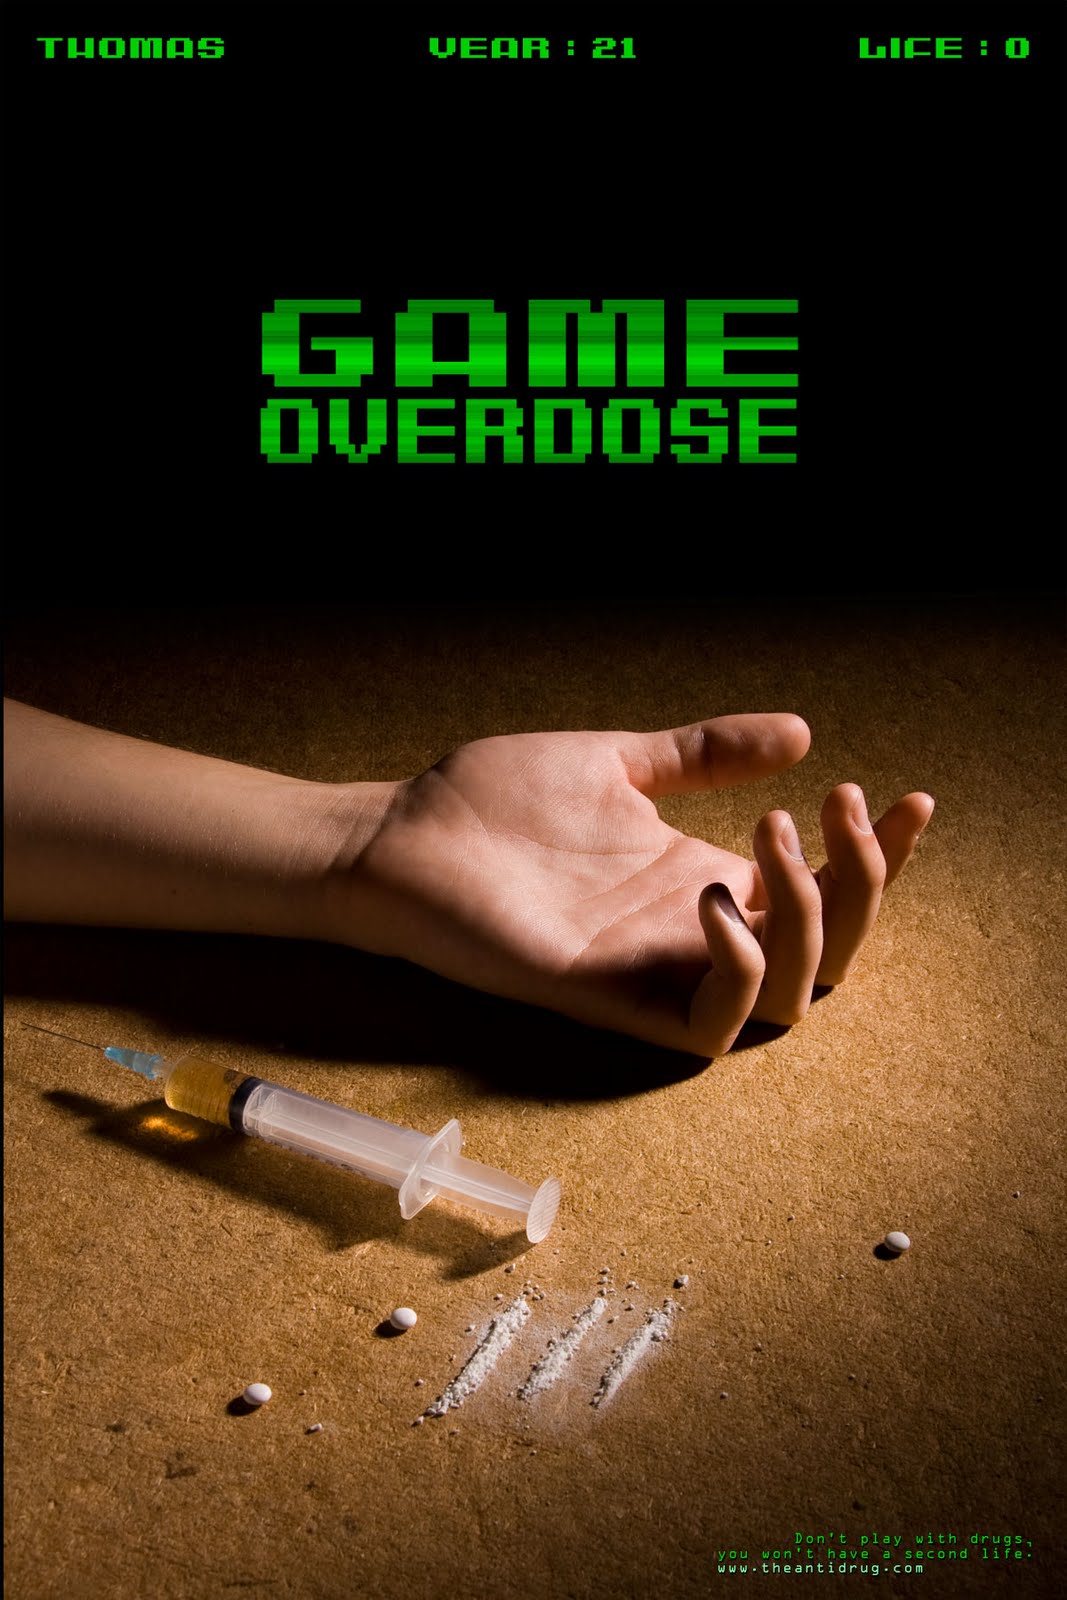 DES 511: Anti-Drug Campaign